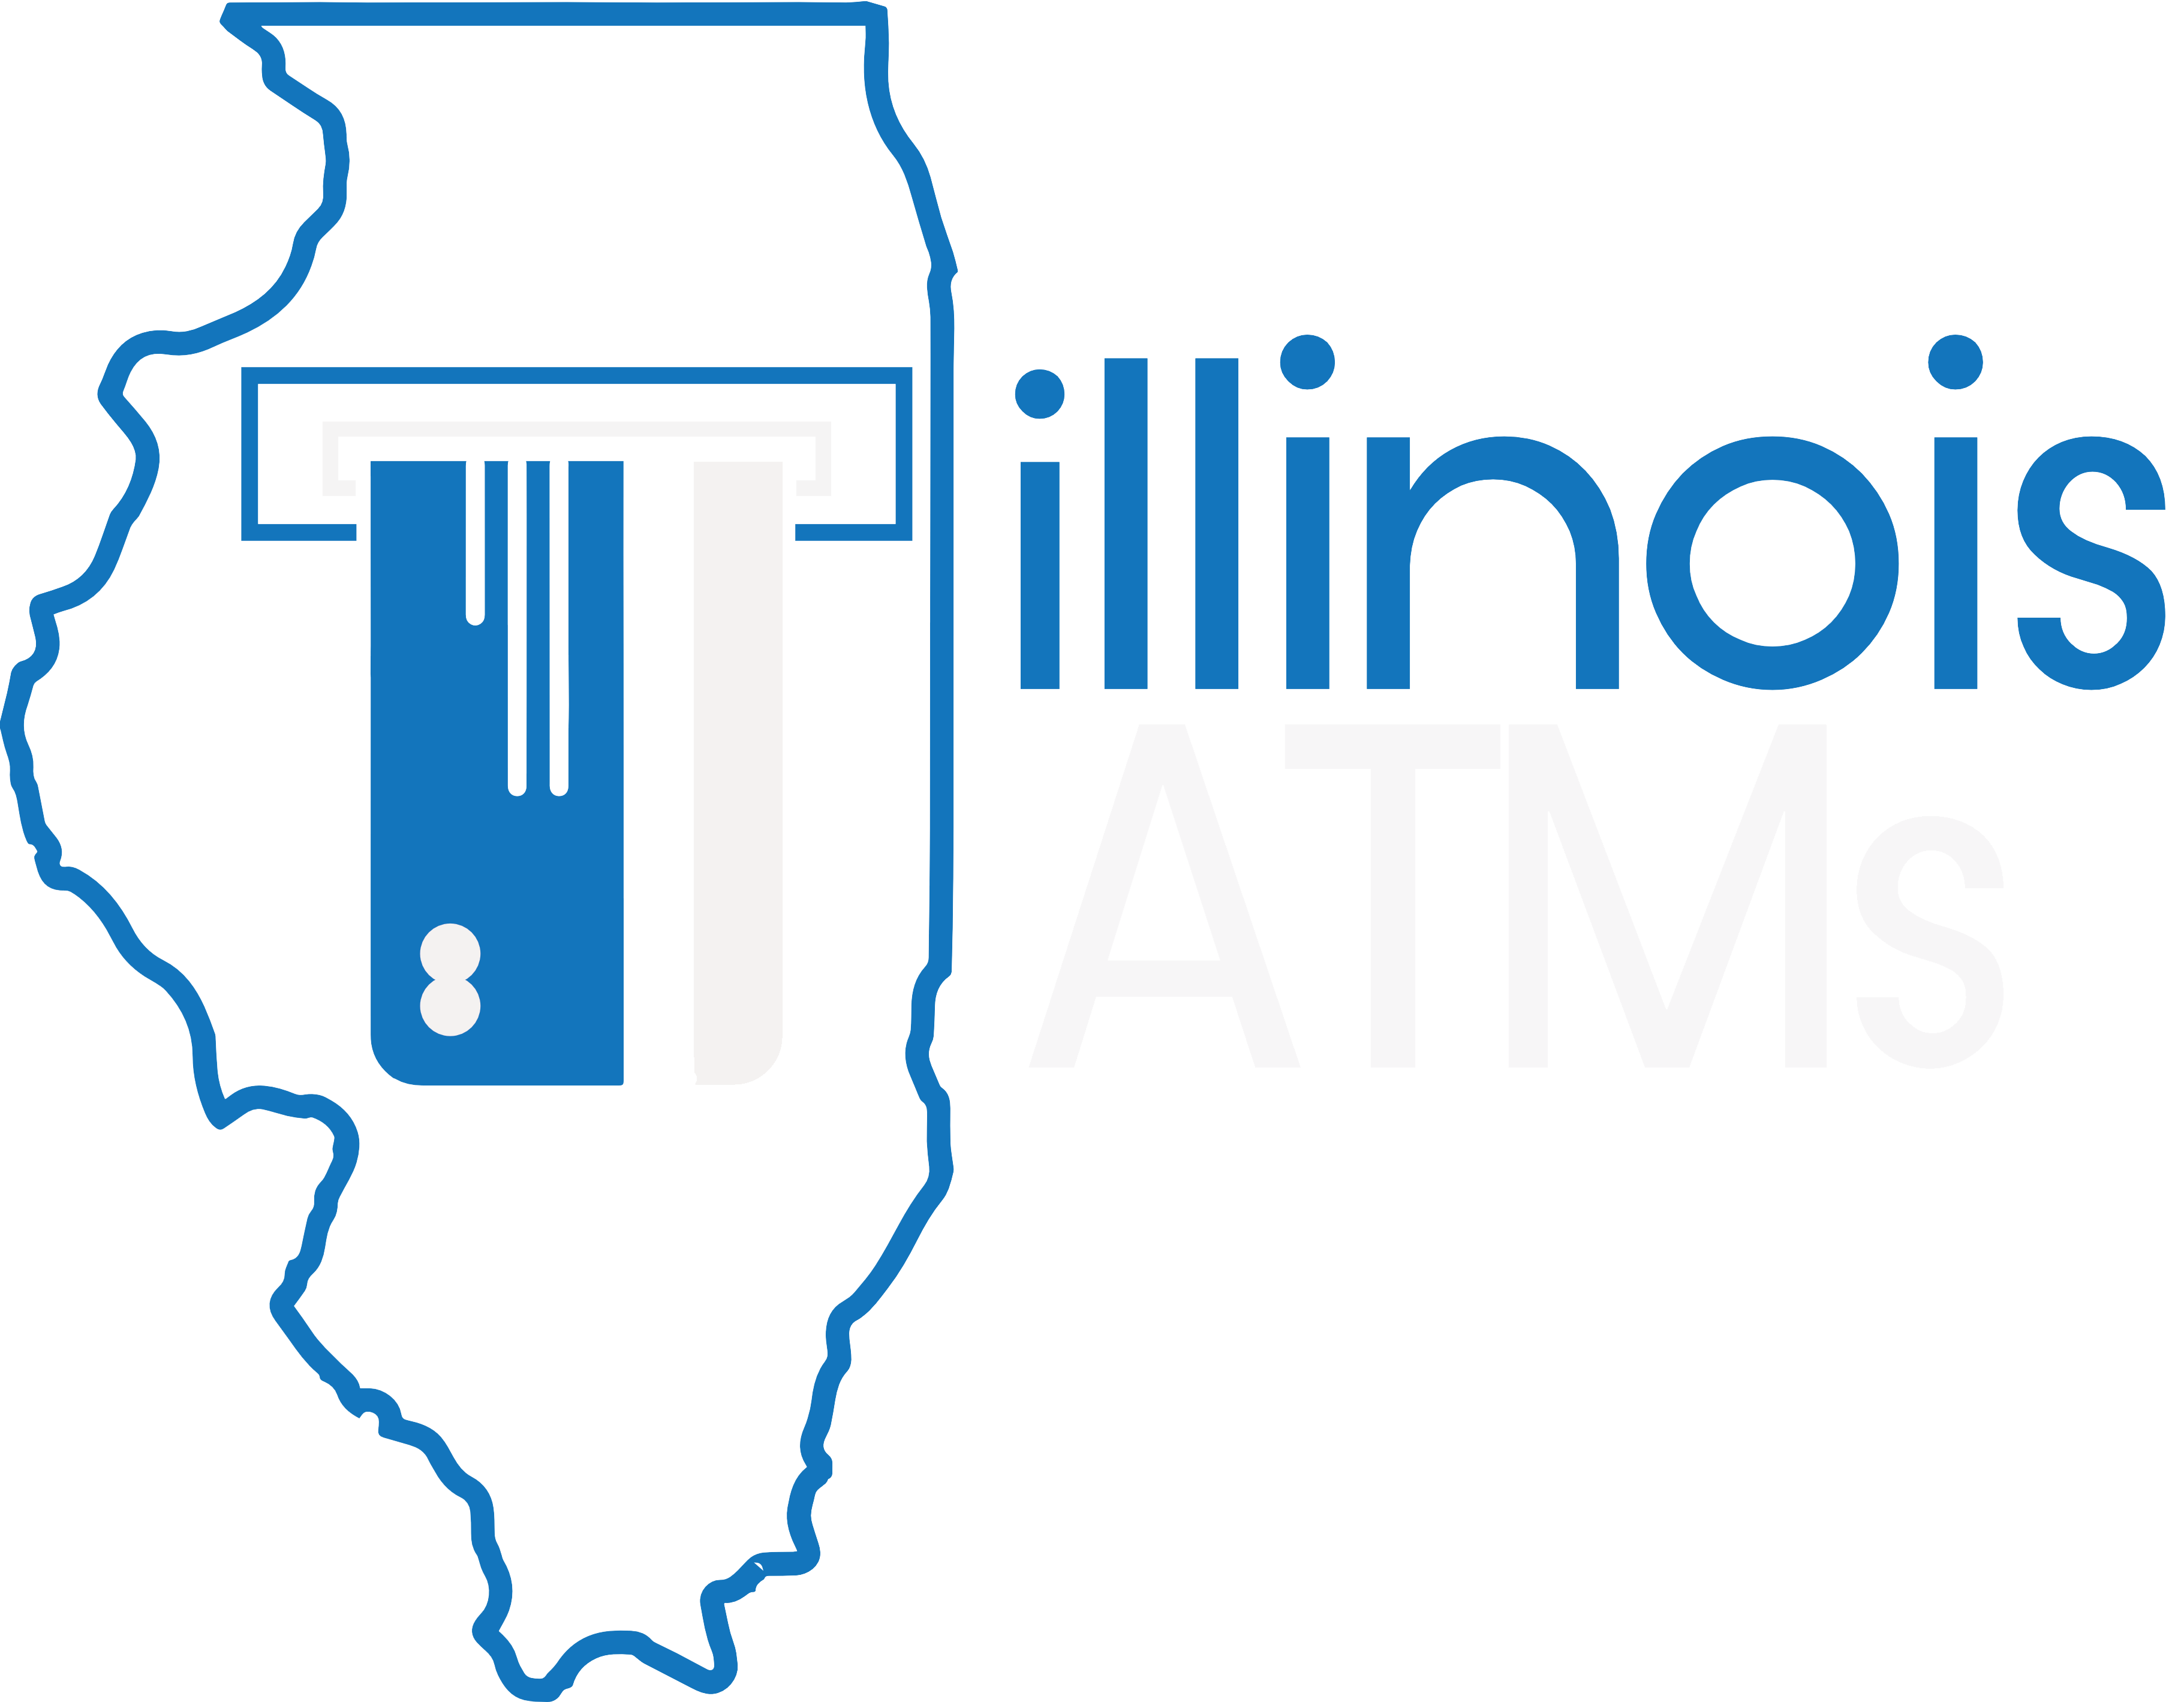 Benefits Illinois ATMs